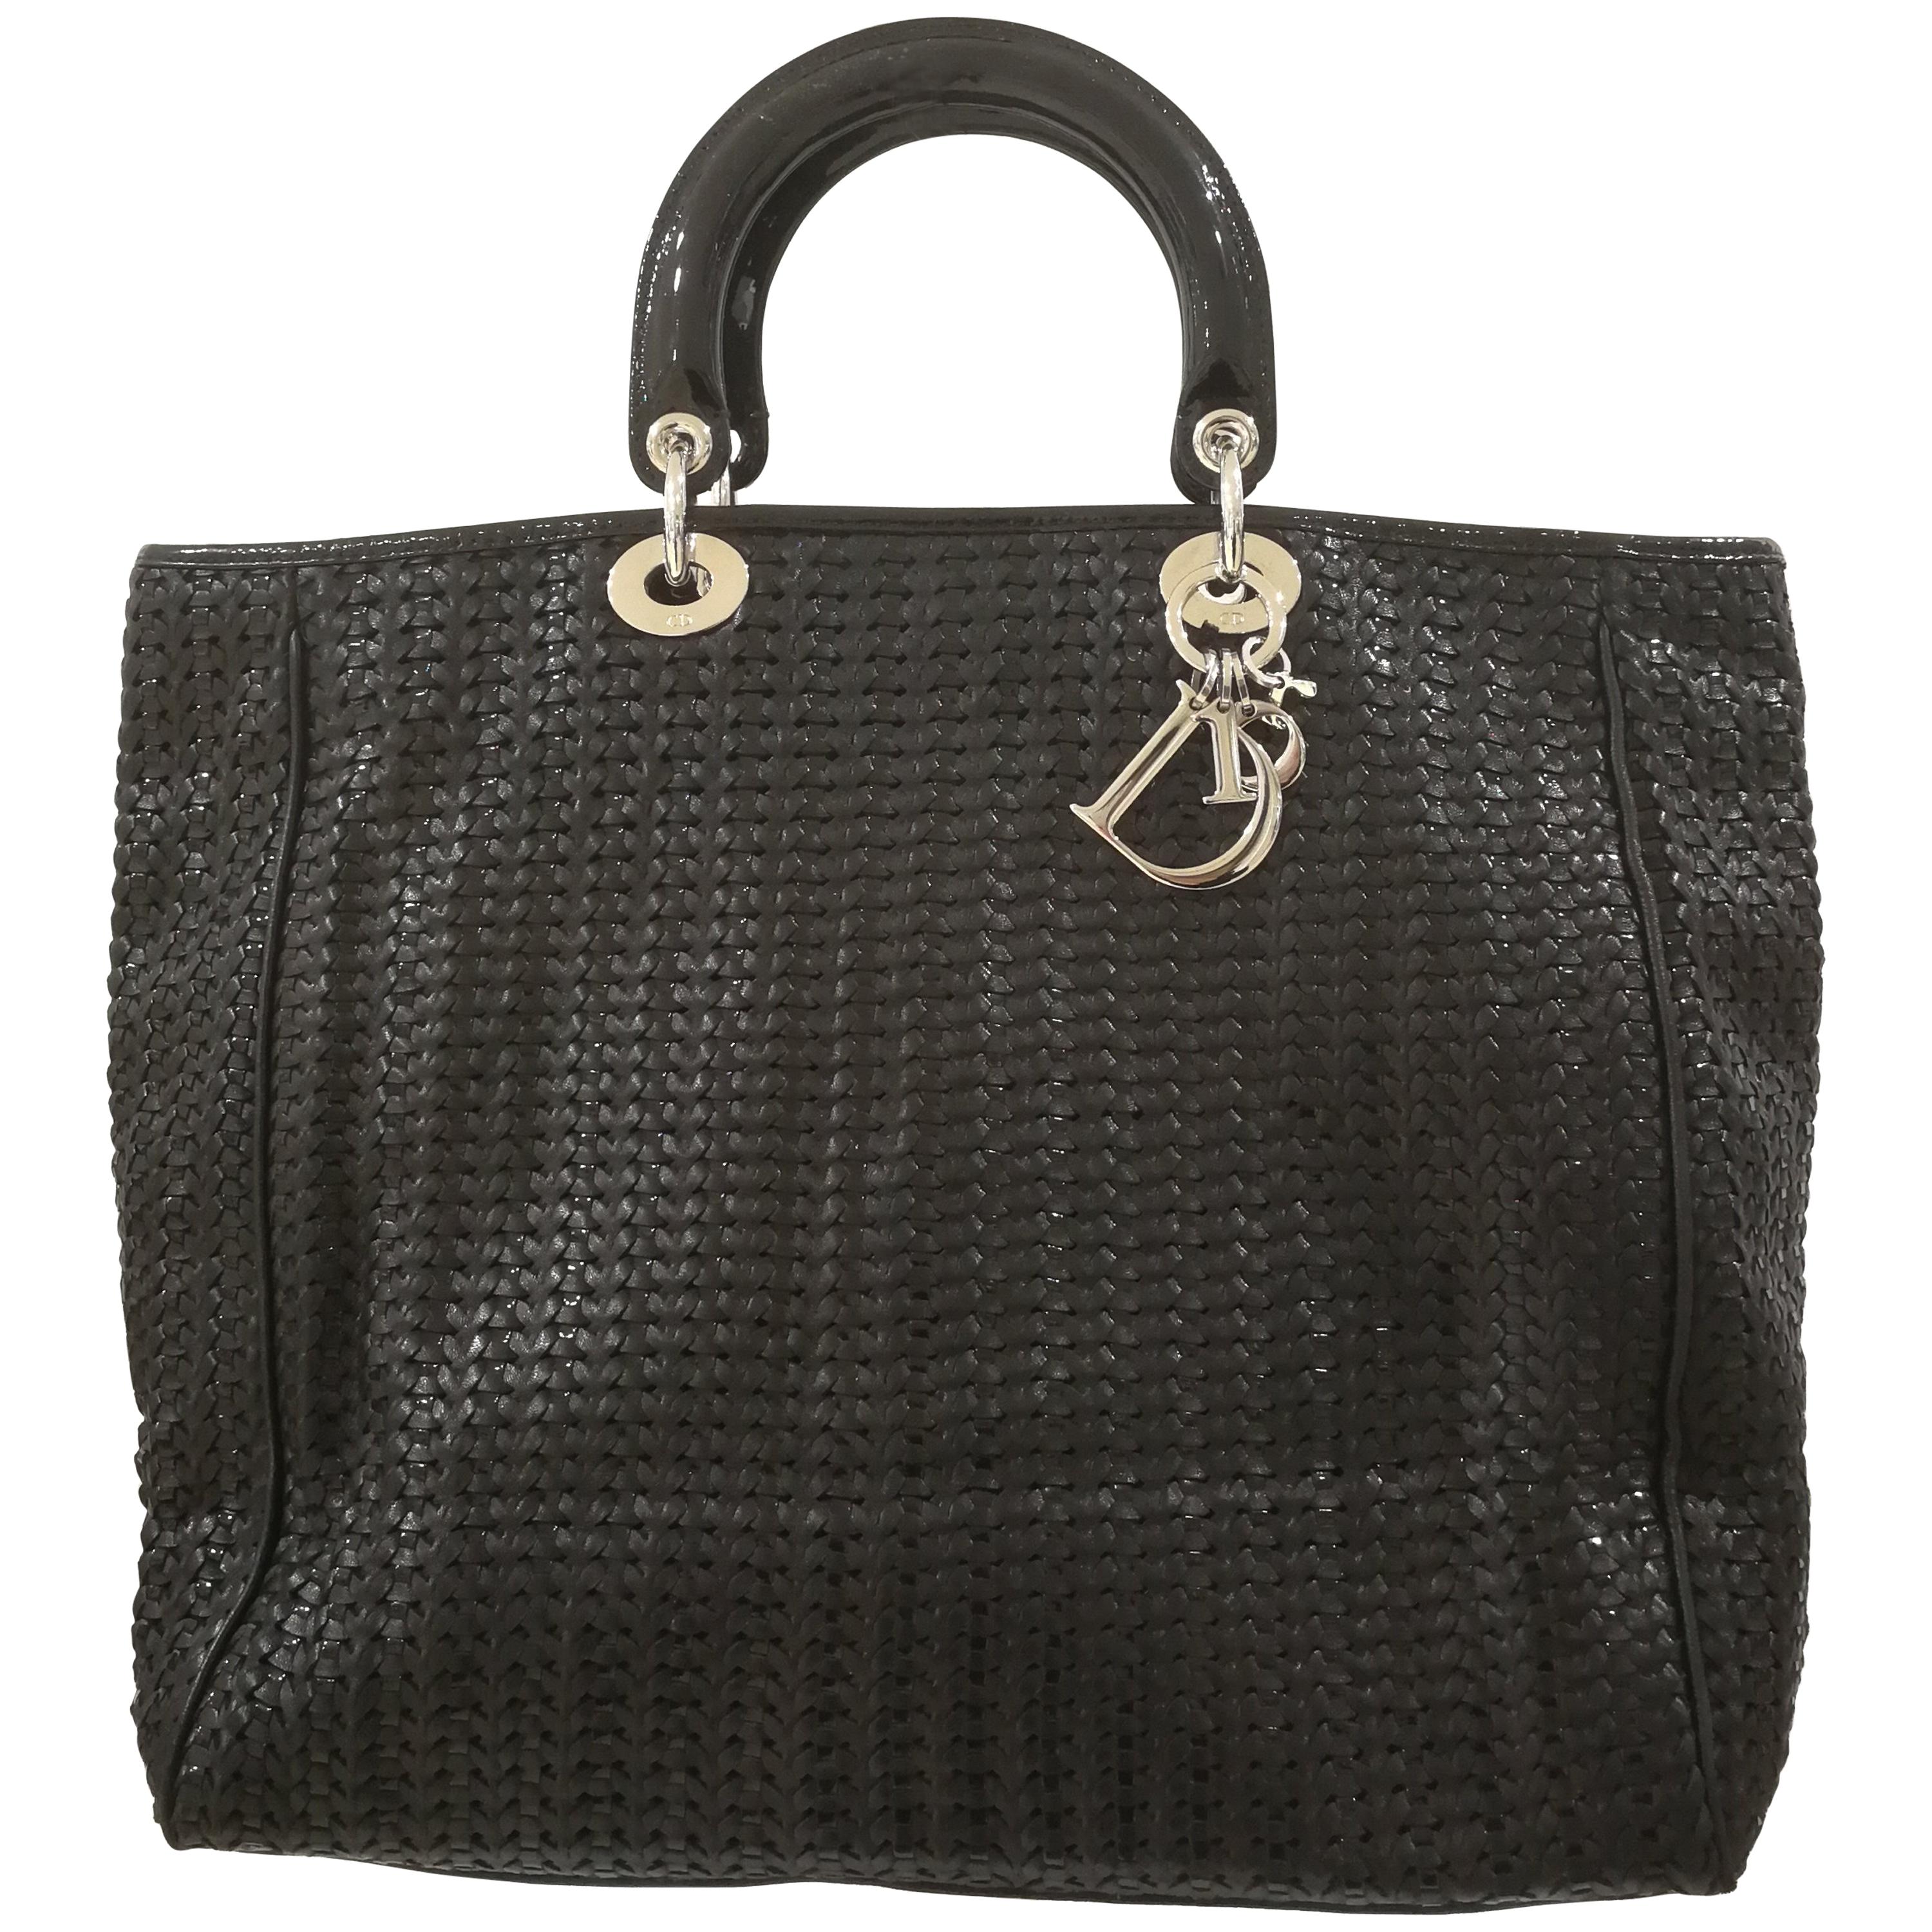 Christian Dior Black Patent Leather Bag